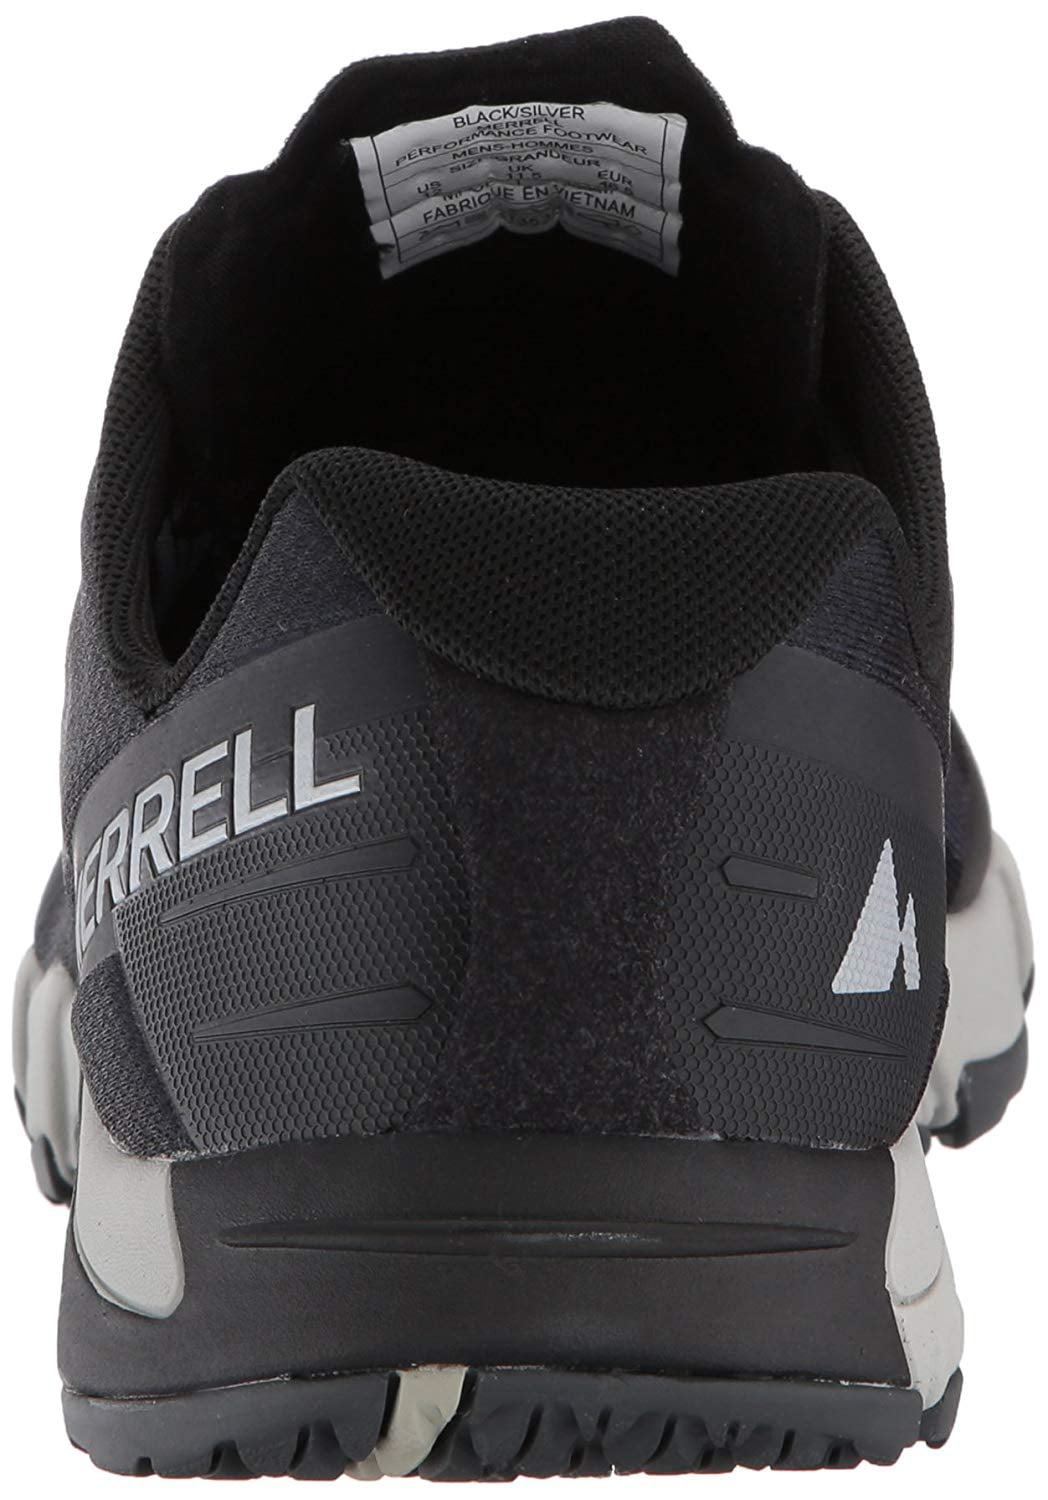 Merrell J09657: Mens Bare Access Black Silver Training Sneakers (11.5 D(M) US Men) Walmart.com